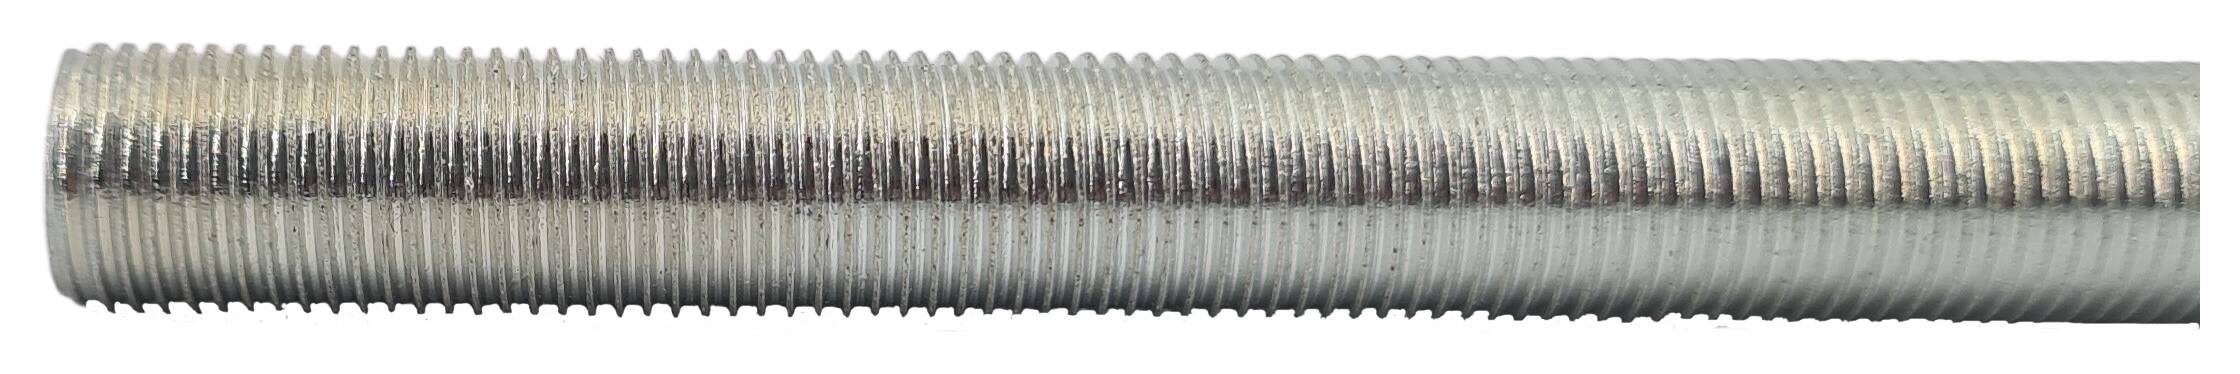 iron thread tube M10x1x385 round zinc